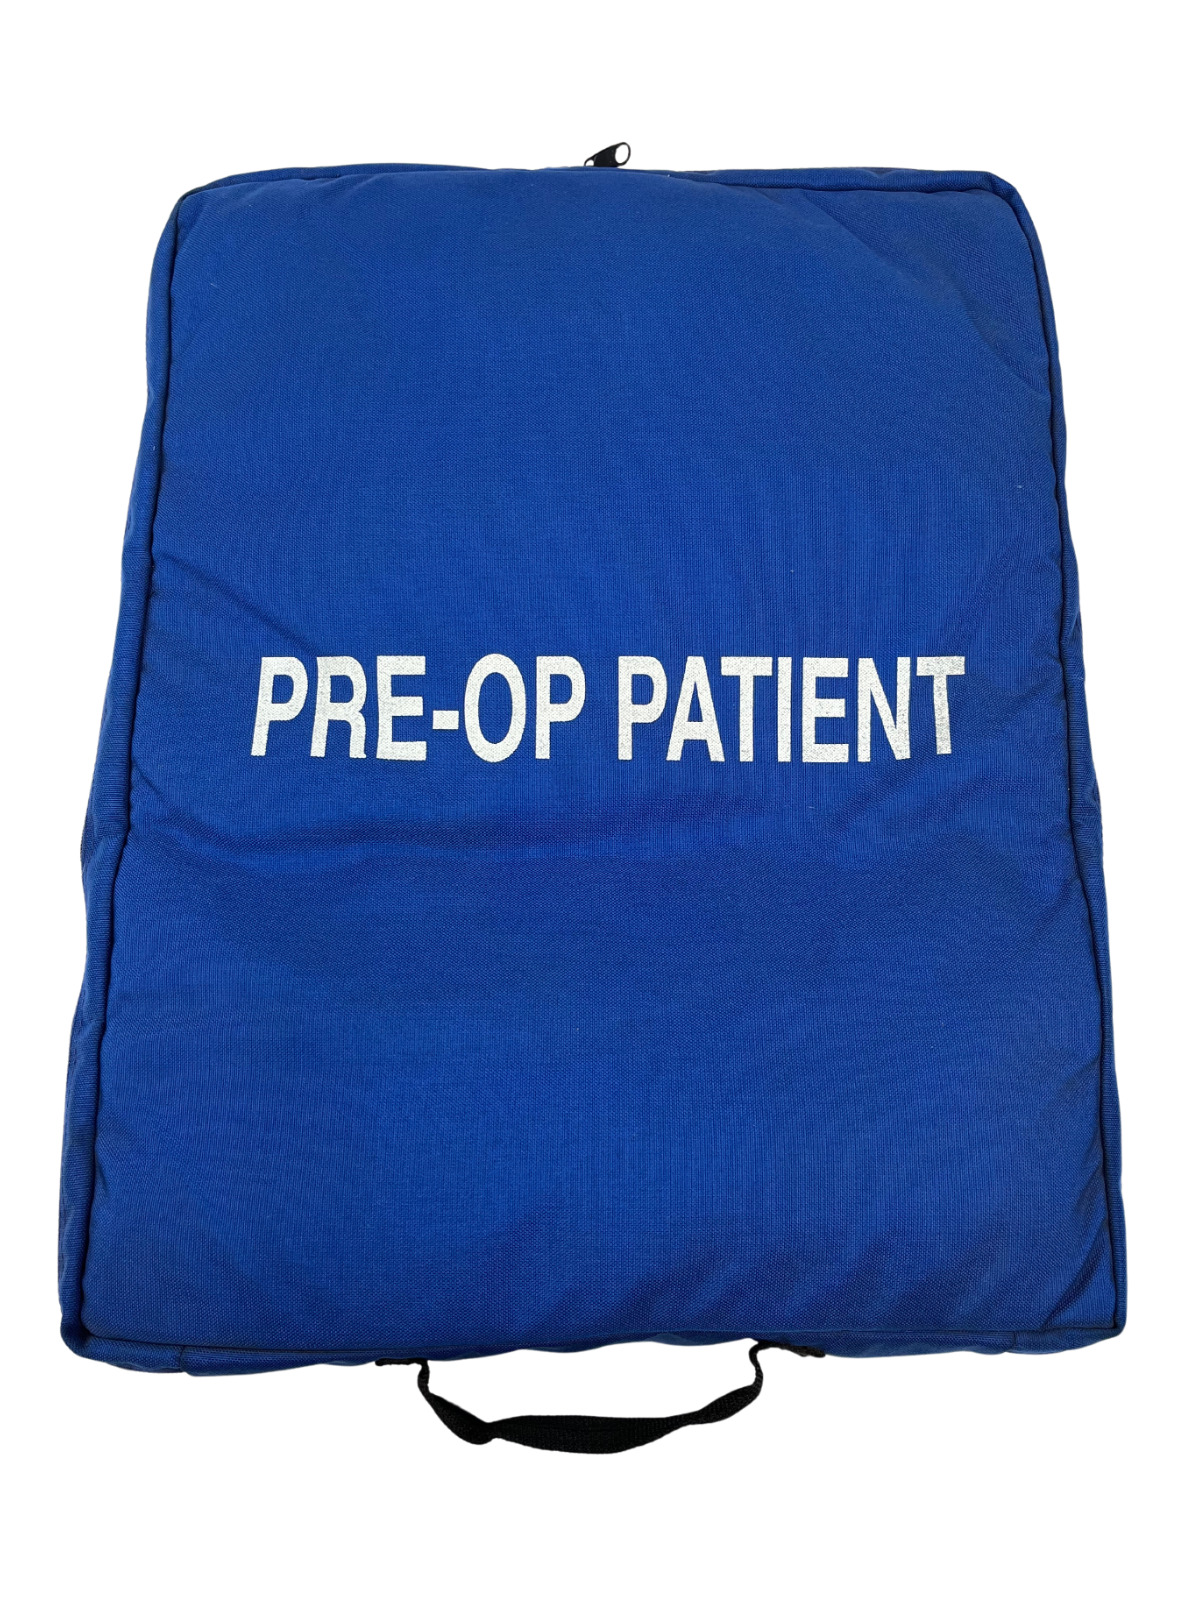 Pre-Op Patient Medical Bag #43009 With Medical Supplies *mocinc.1982*